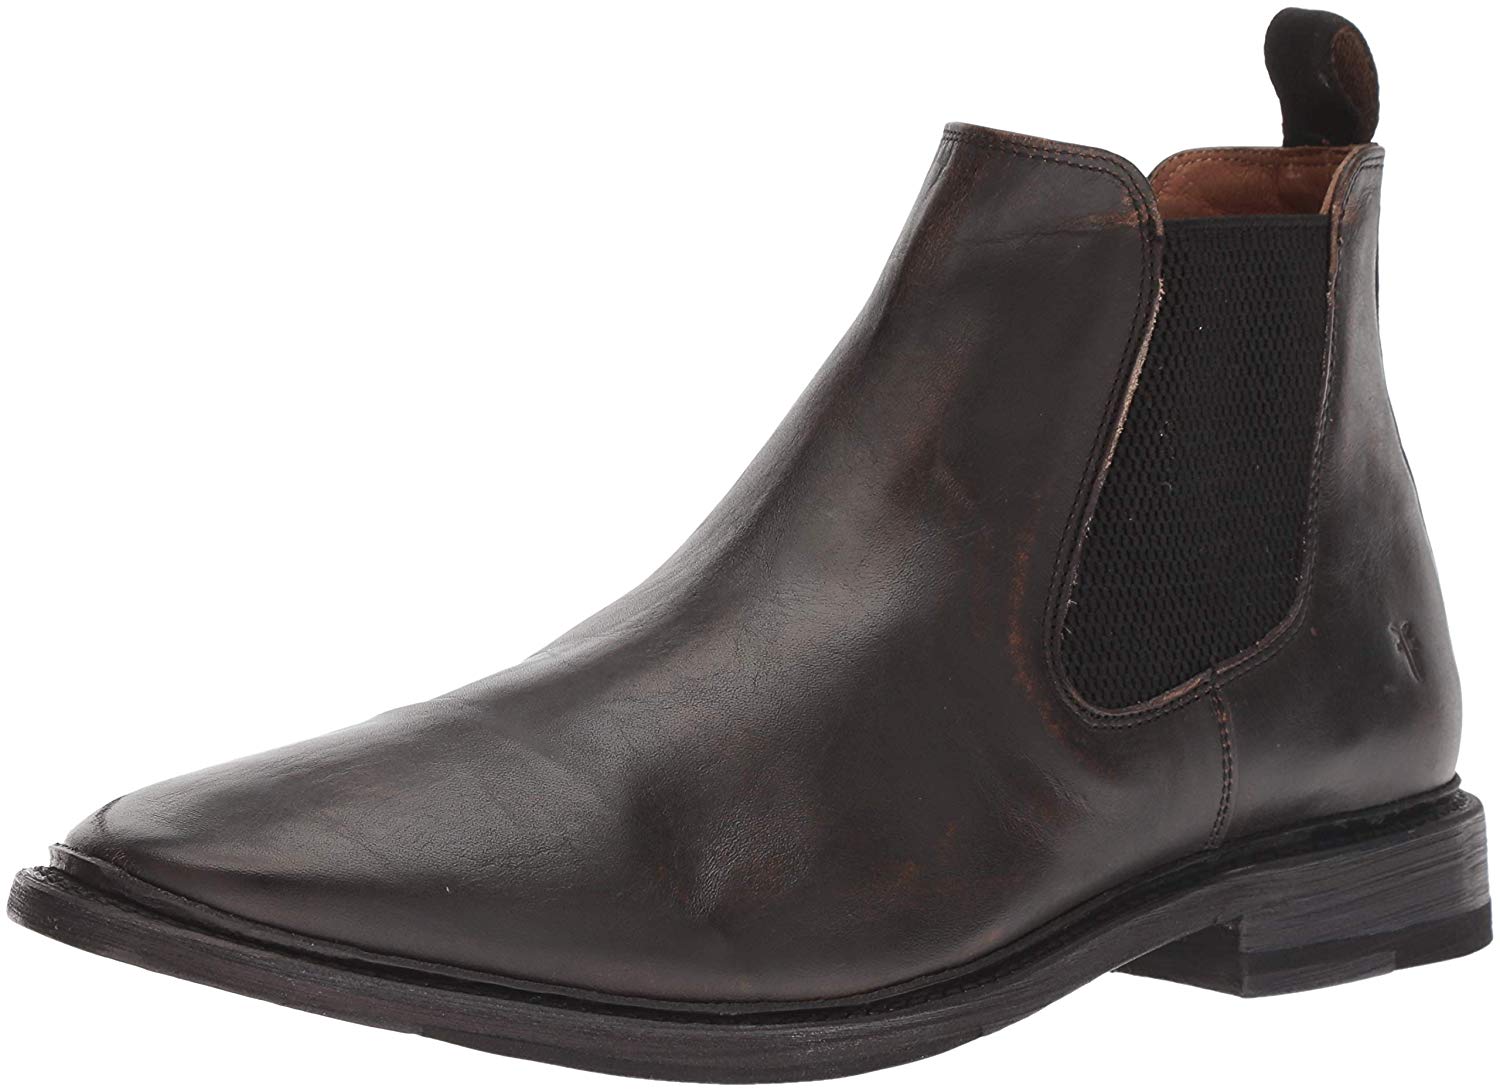 FRYE Men's Paul Chelsea Boot, Black, Size 11.5 4ljl | eBay